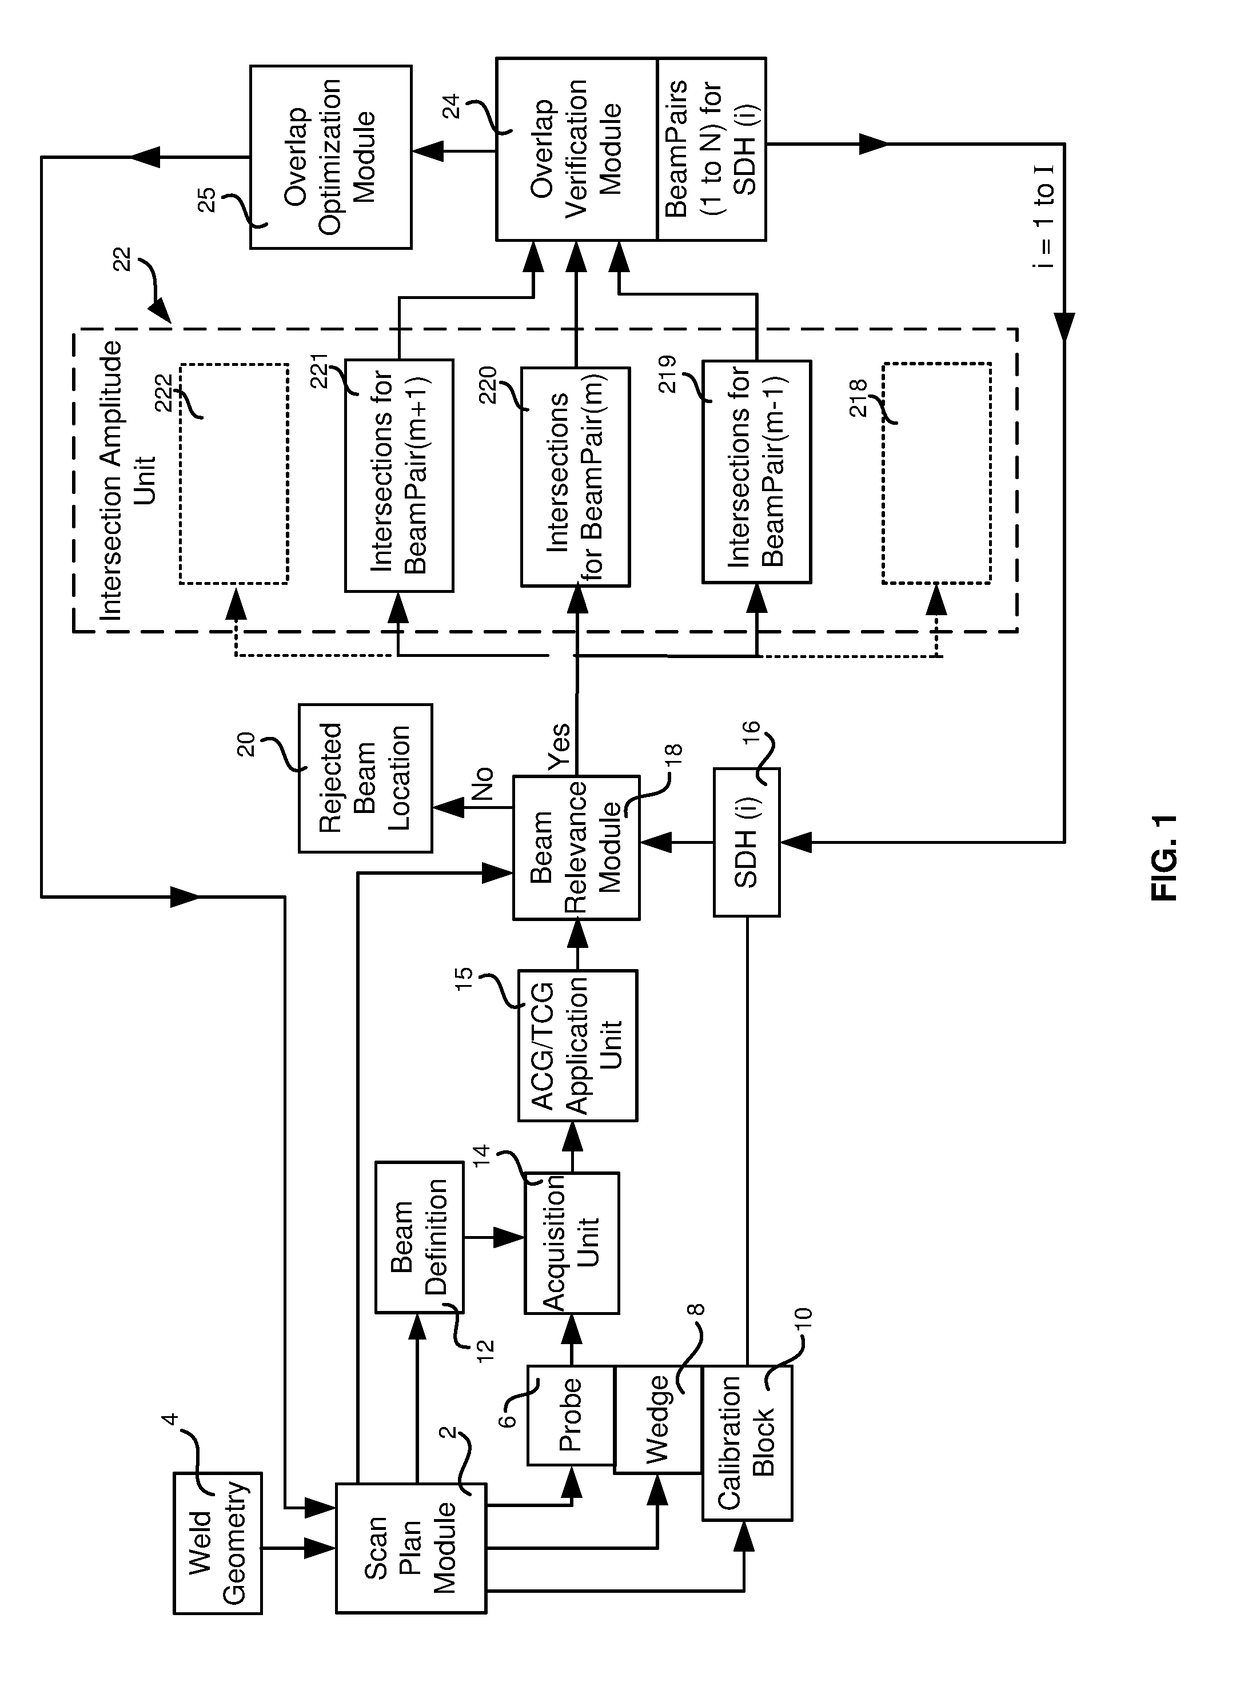 Ultrasonic inspection configuration with beam overlap verification